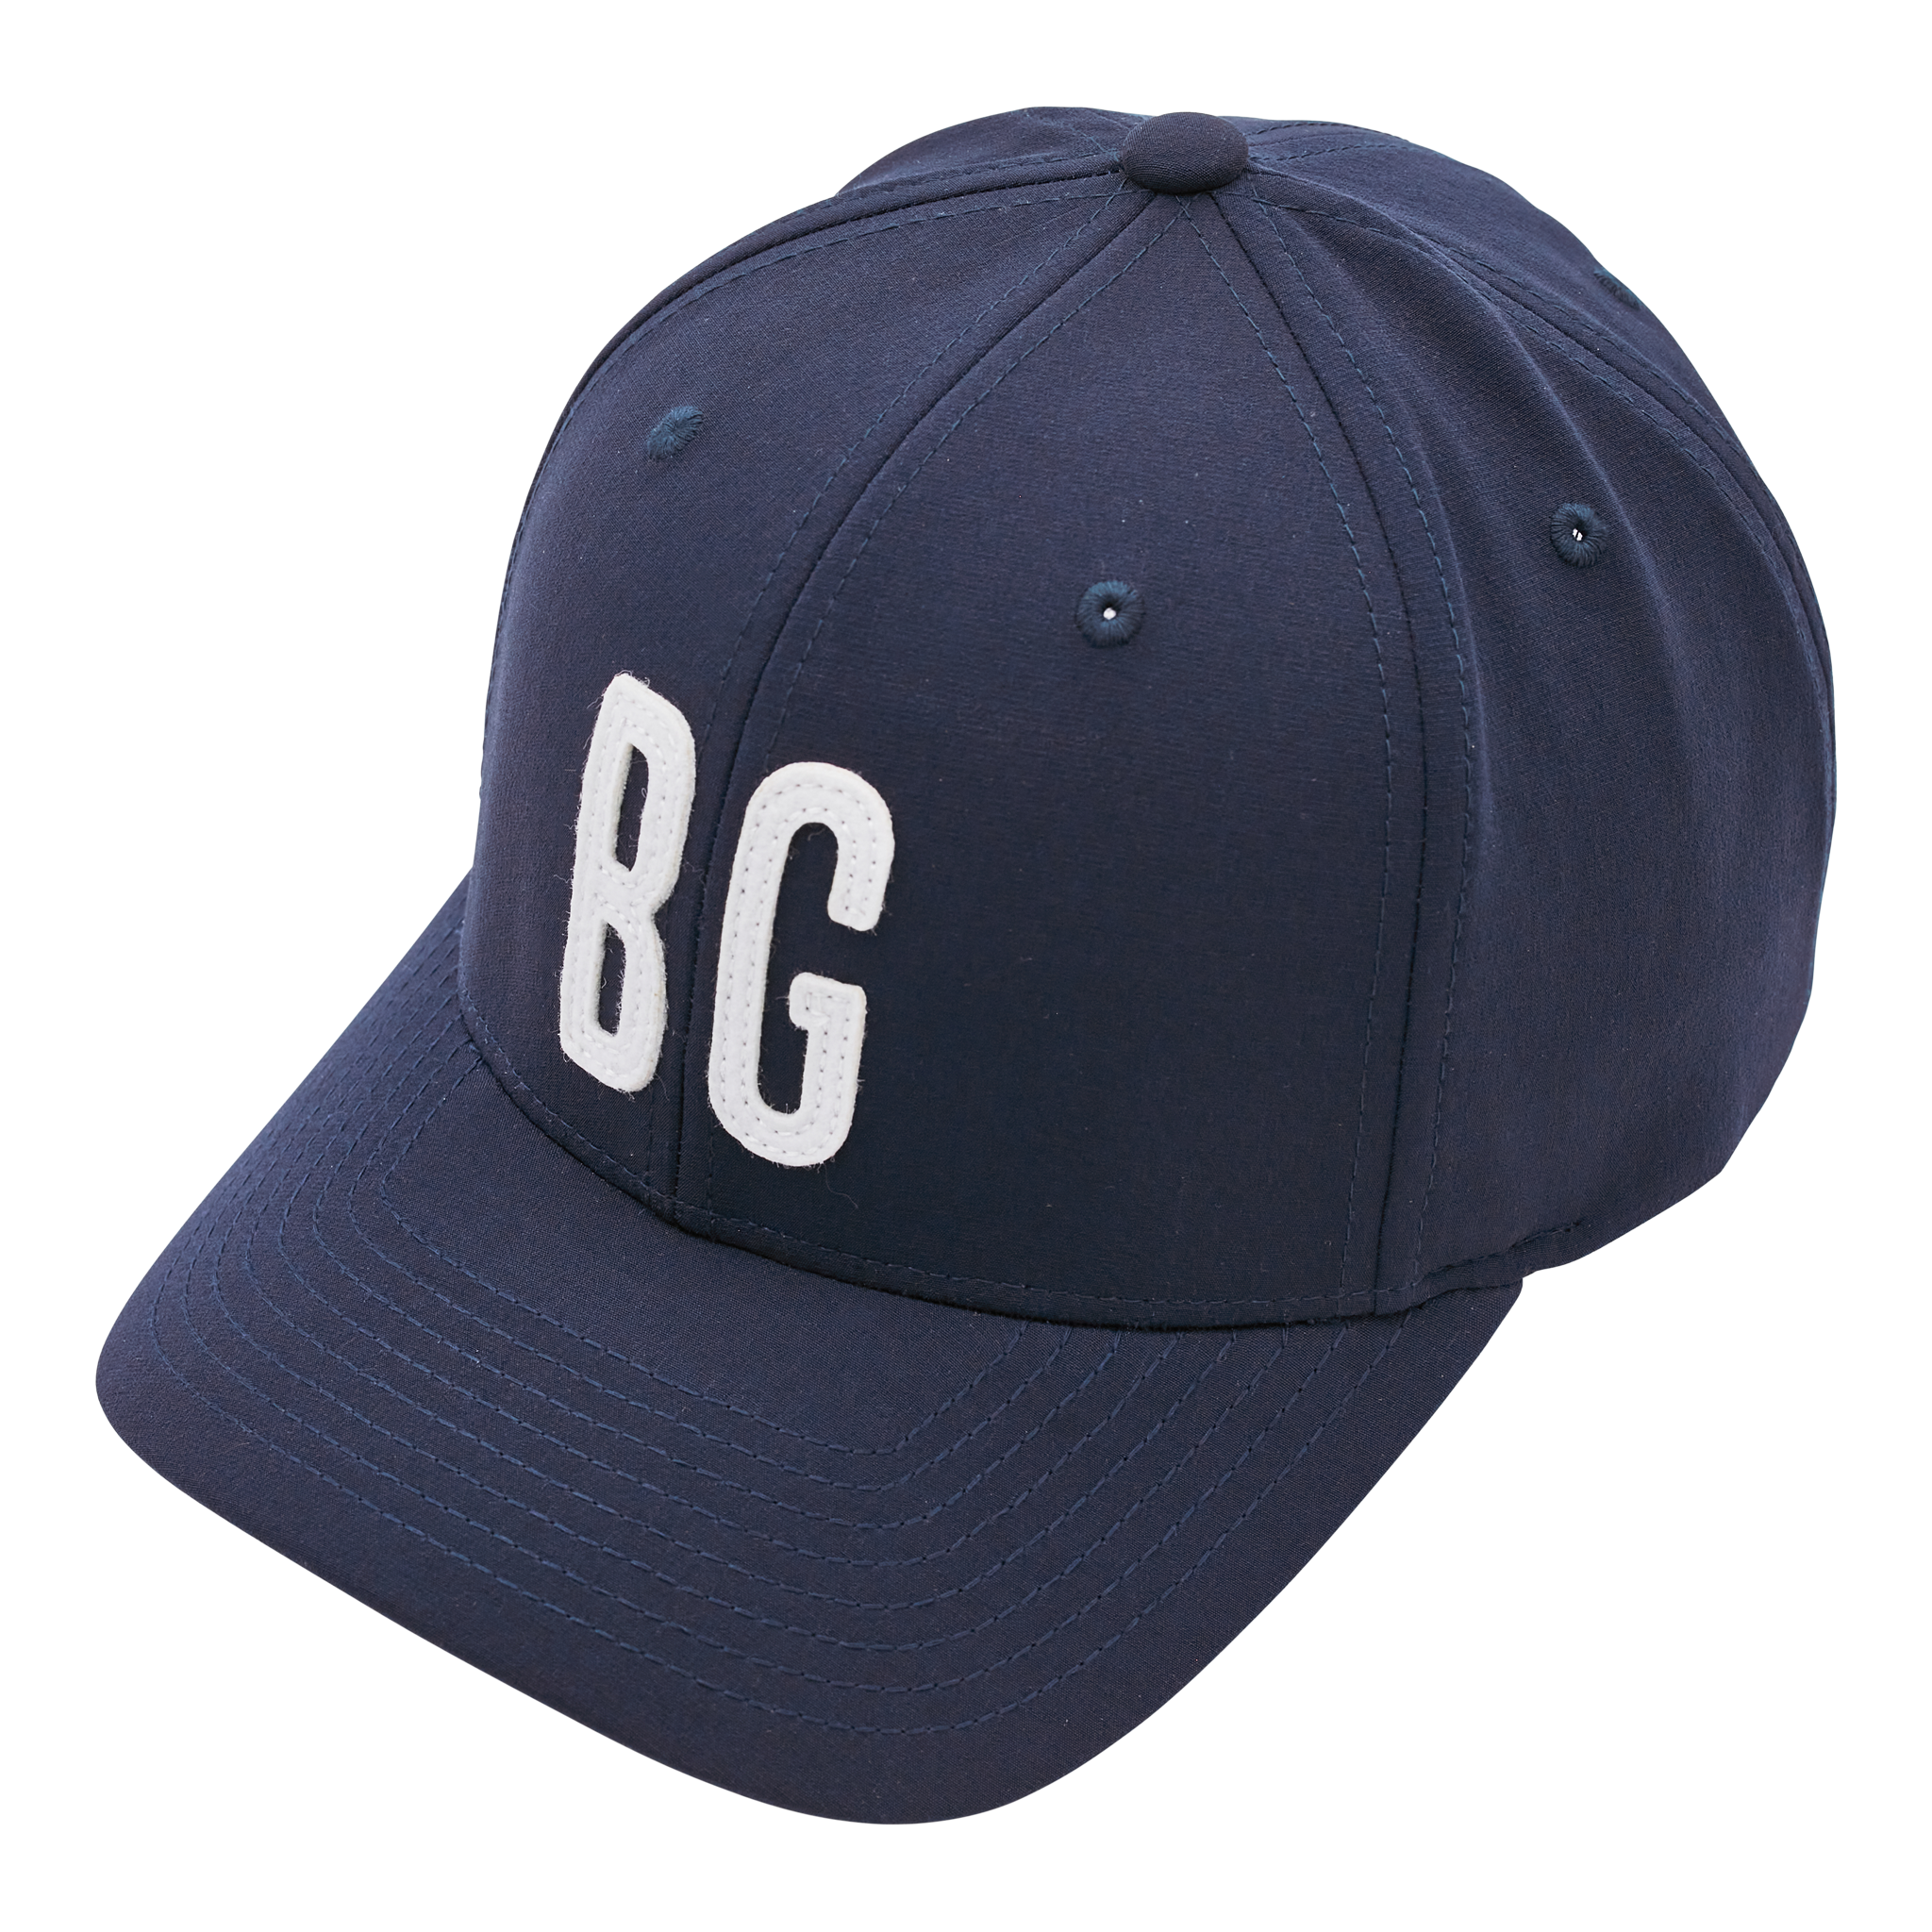 Bettinardi BG Navy Performance Hat